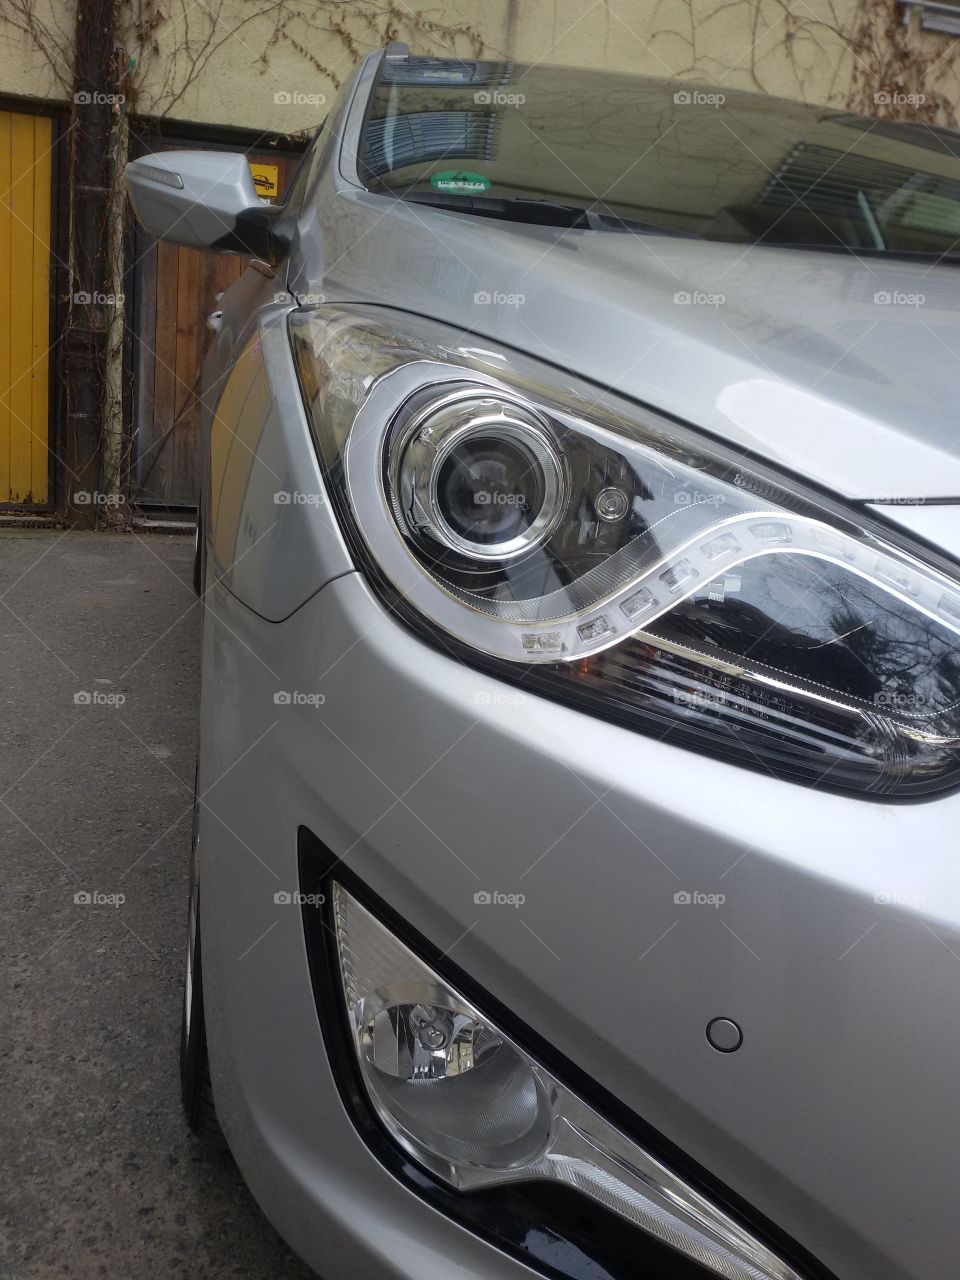 xenon headlamps on new car